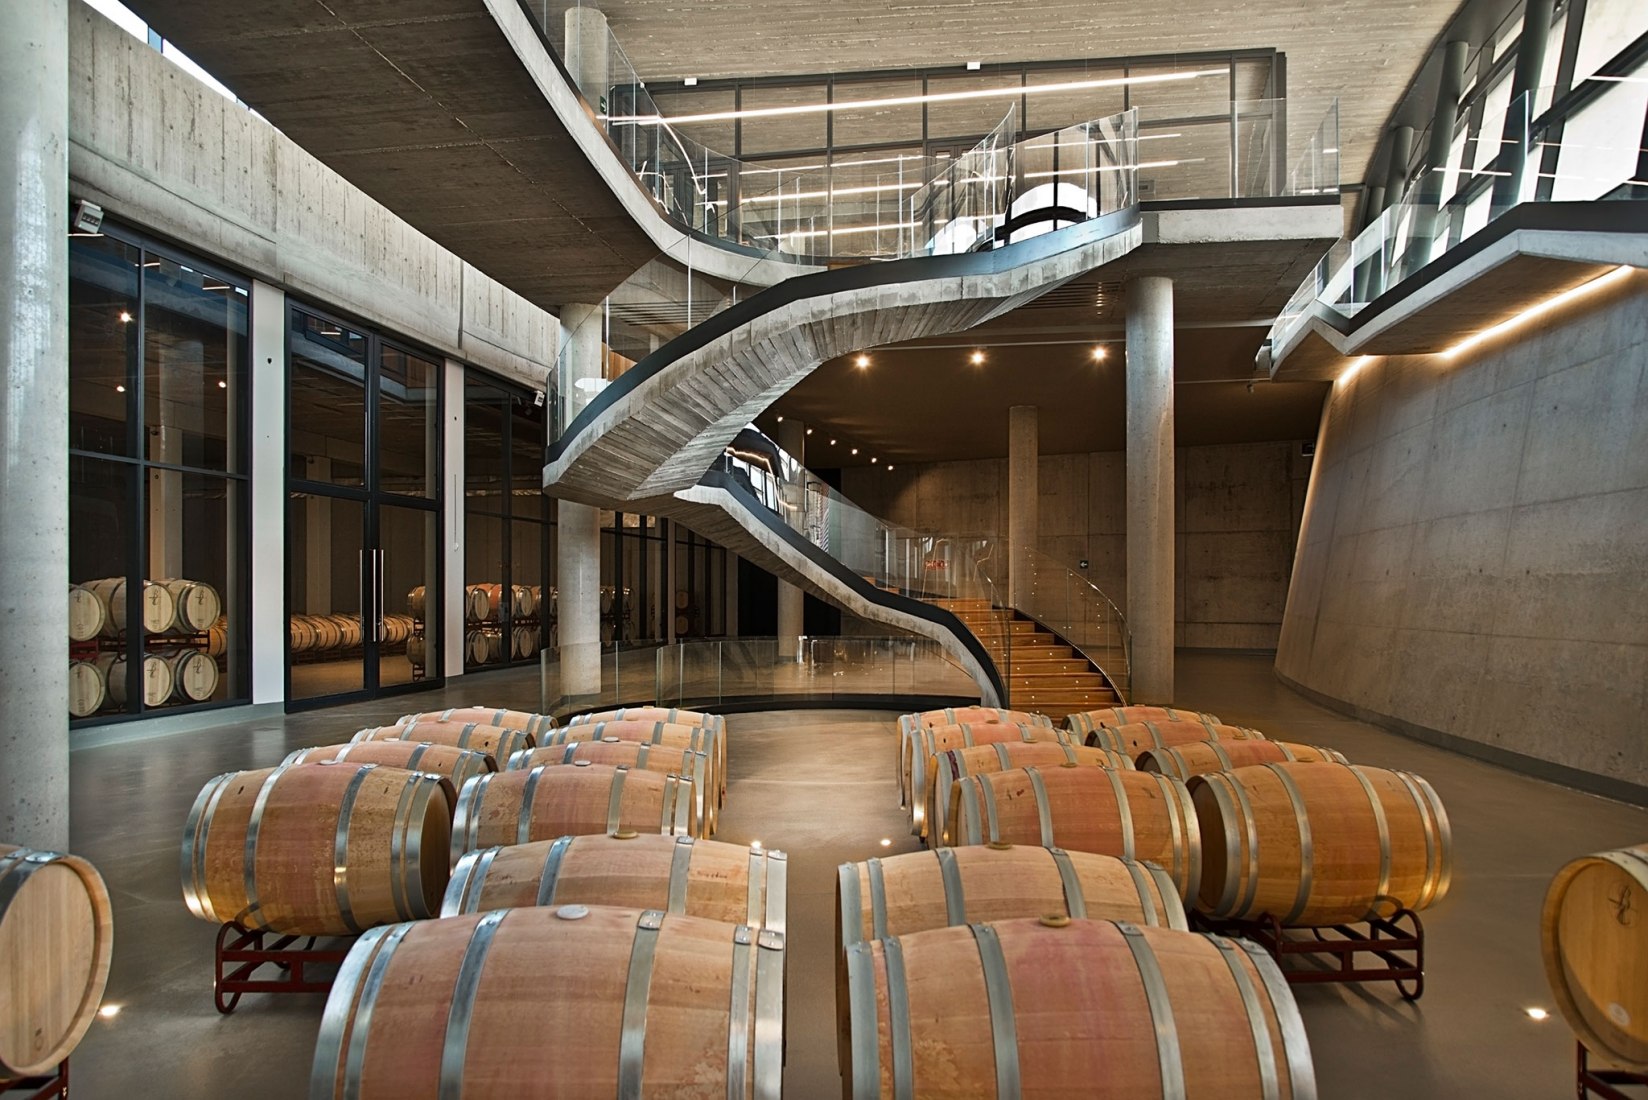 Beronia Rioja Winery by Borja Gómez, Gonzalo Tello / IDOM. Photograph by Francesco Pintón